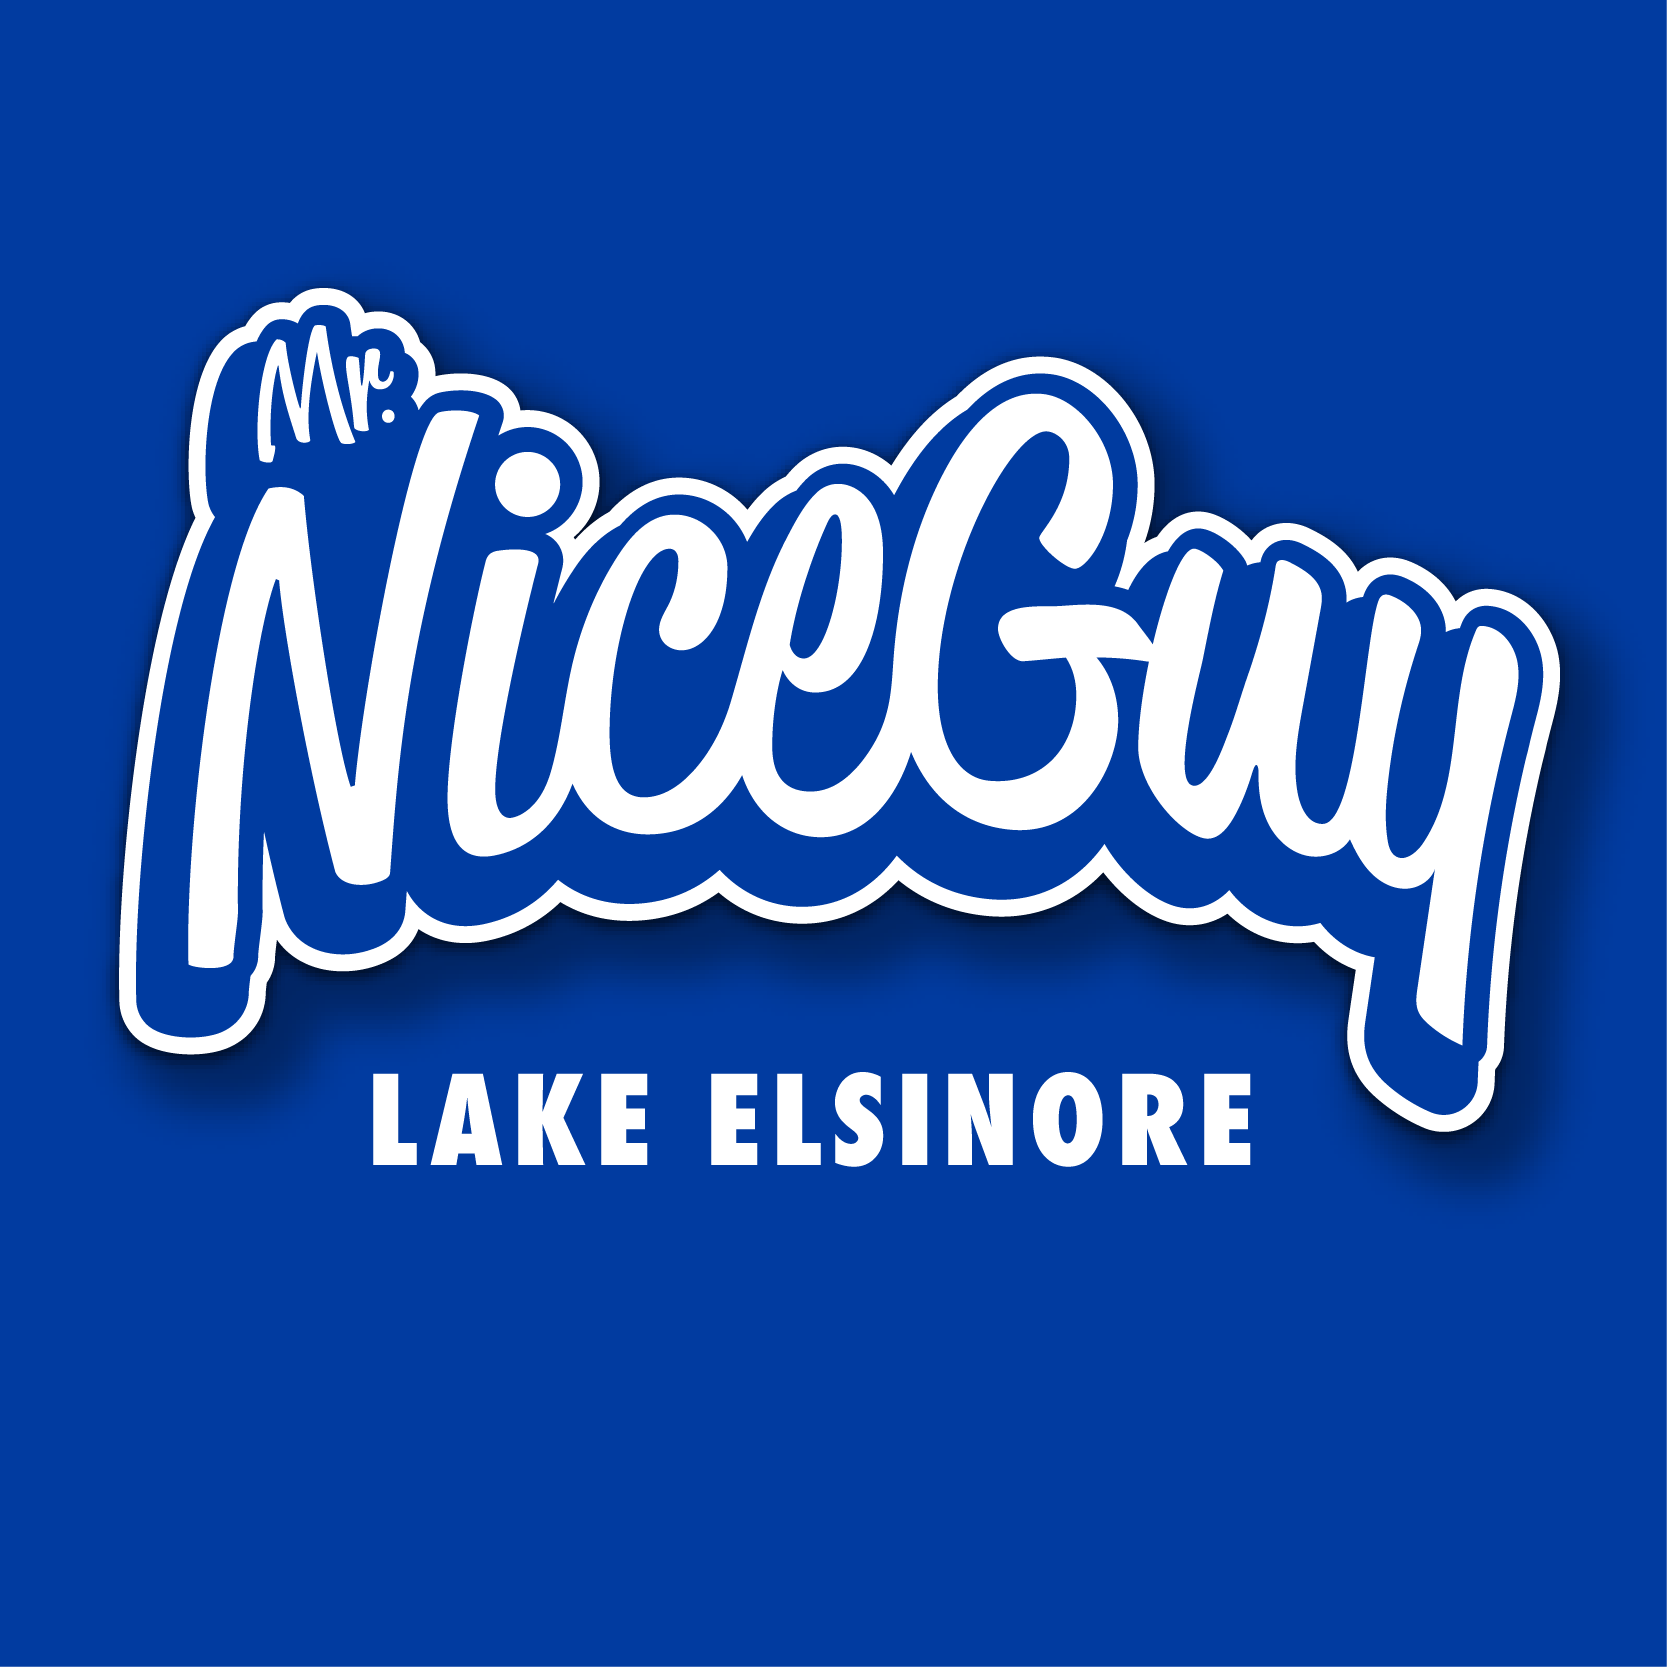 Mr. Nice Guy - Lake Elsinore Marijuana Dispensary logo